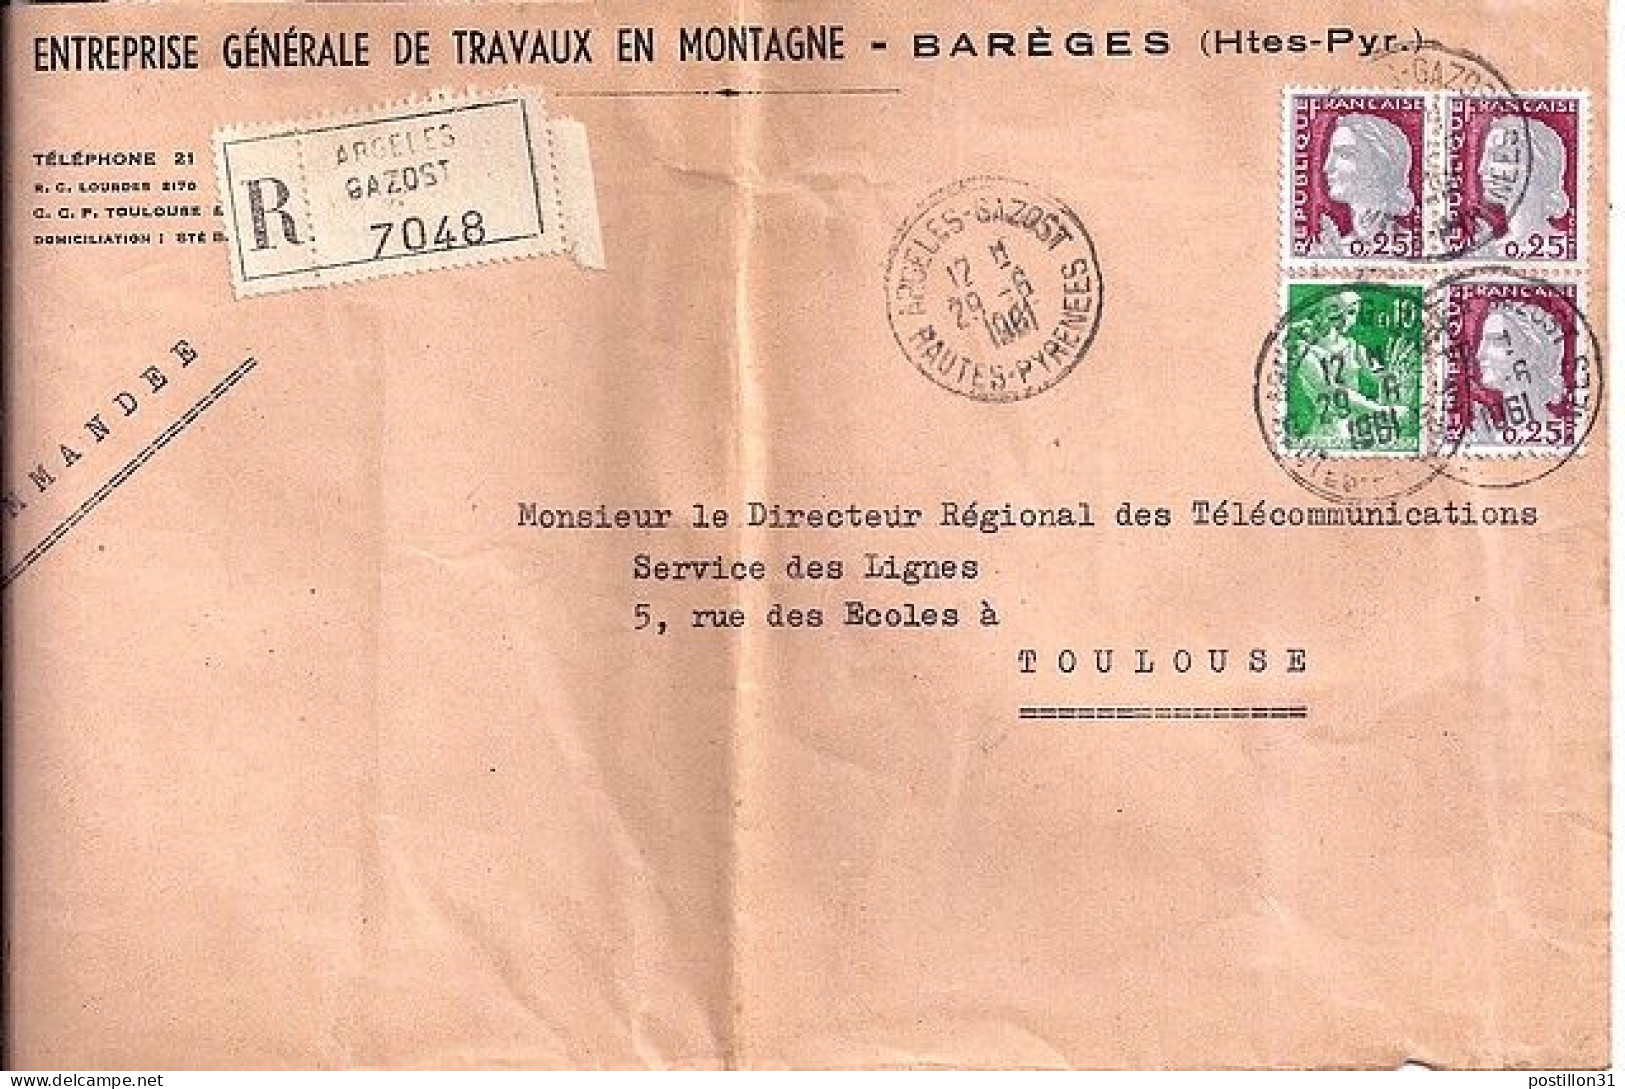 DECARIS N° 1263x3/1231 S/L.REC. DE ARGELES GAZOST / 29.6.61 - 1960 Marianne Of Decaris